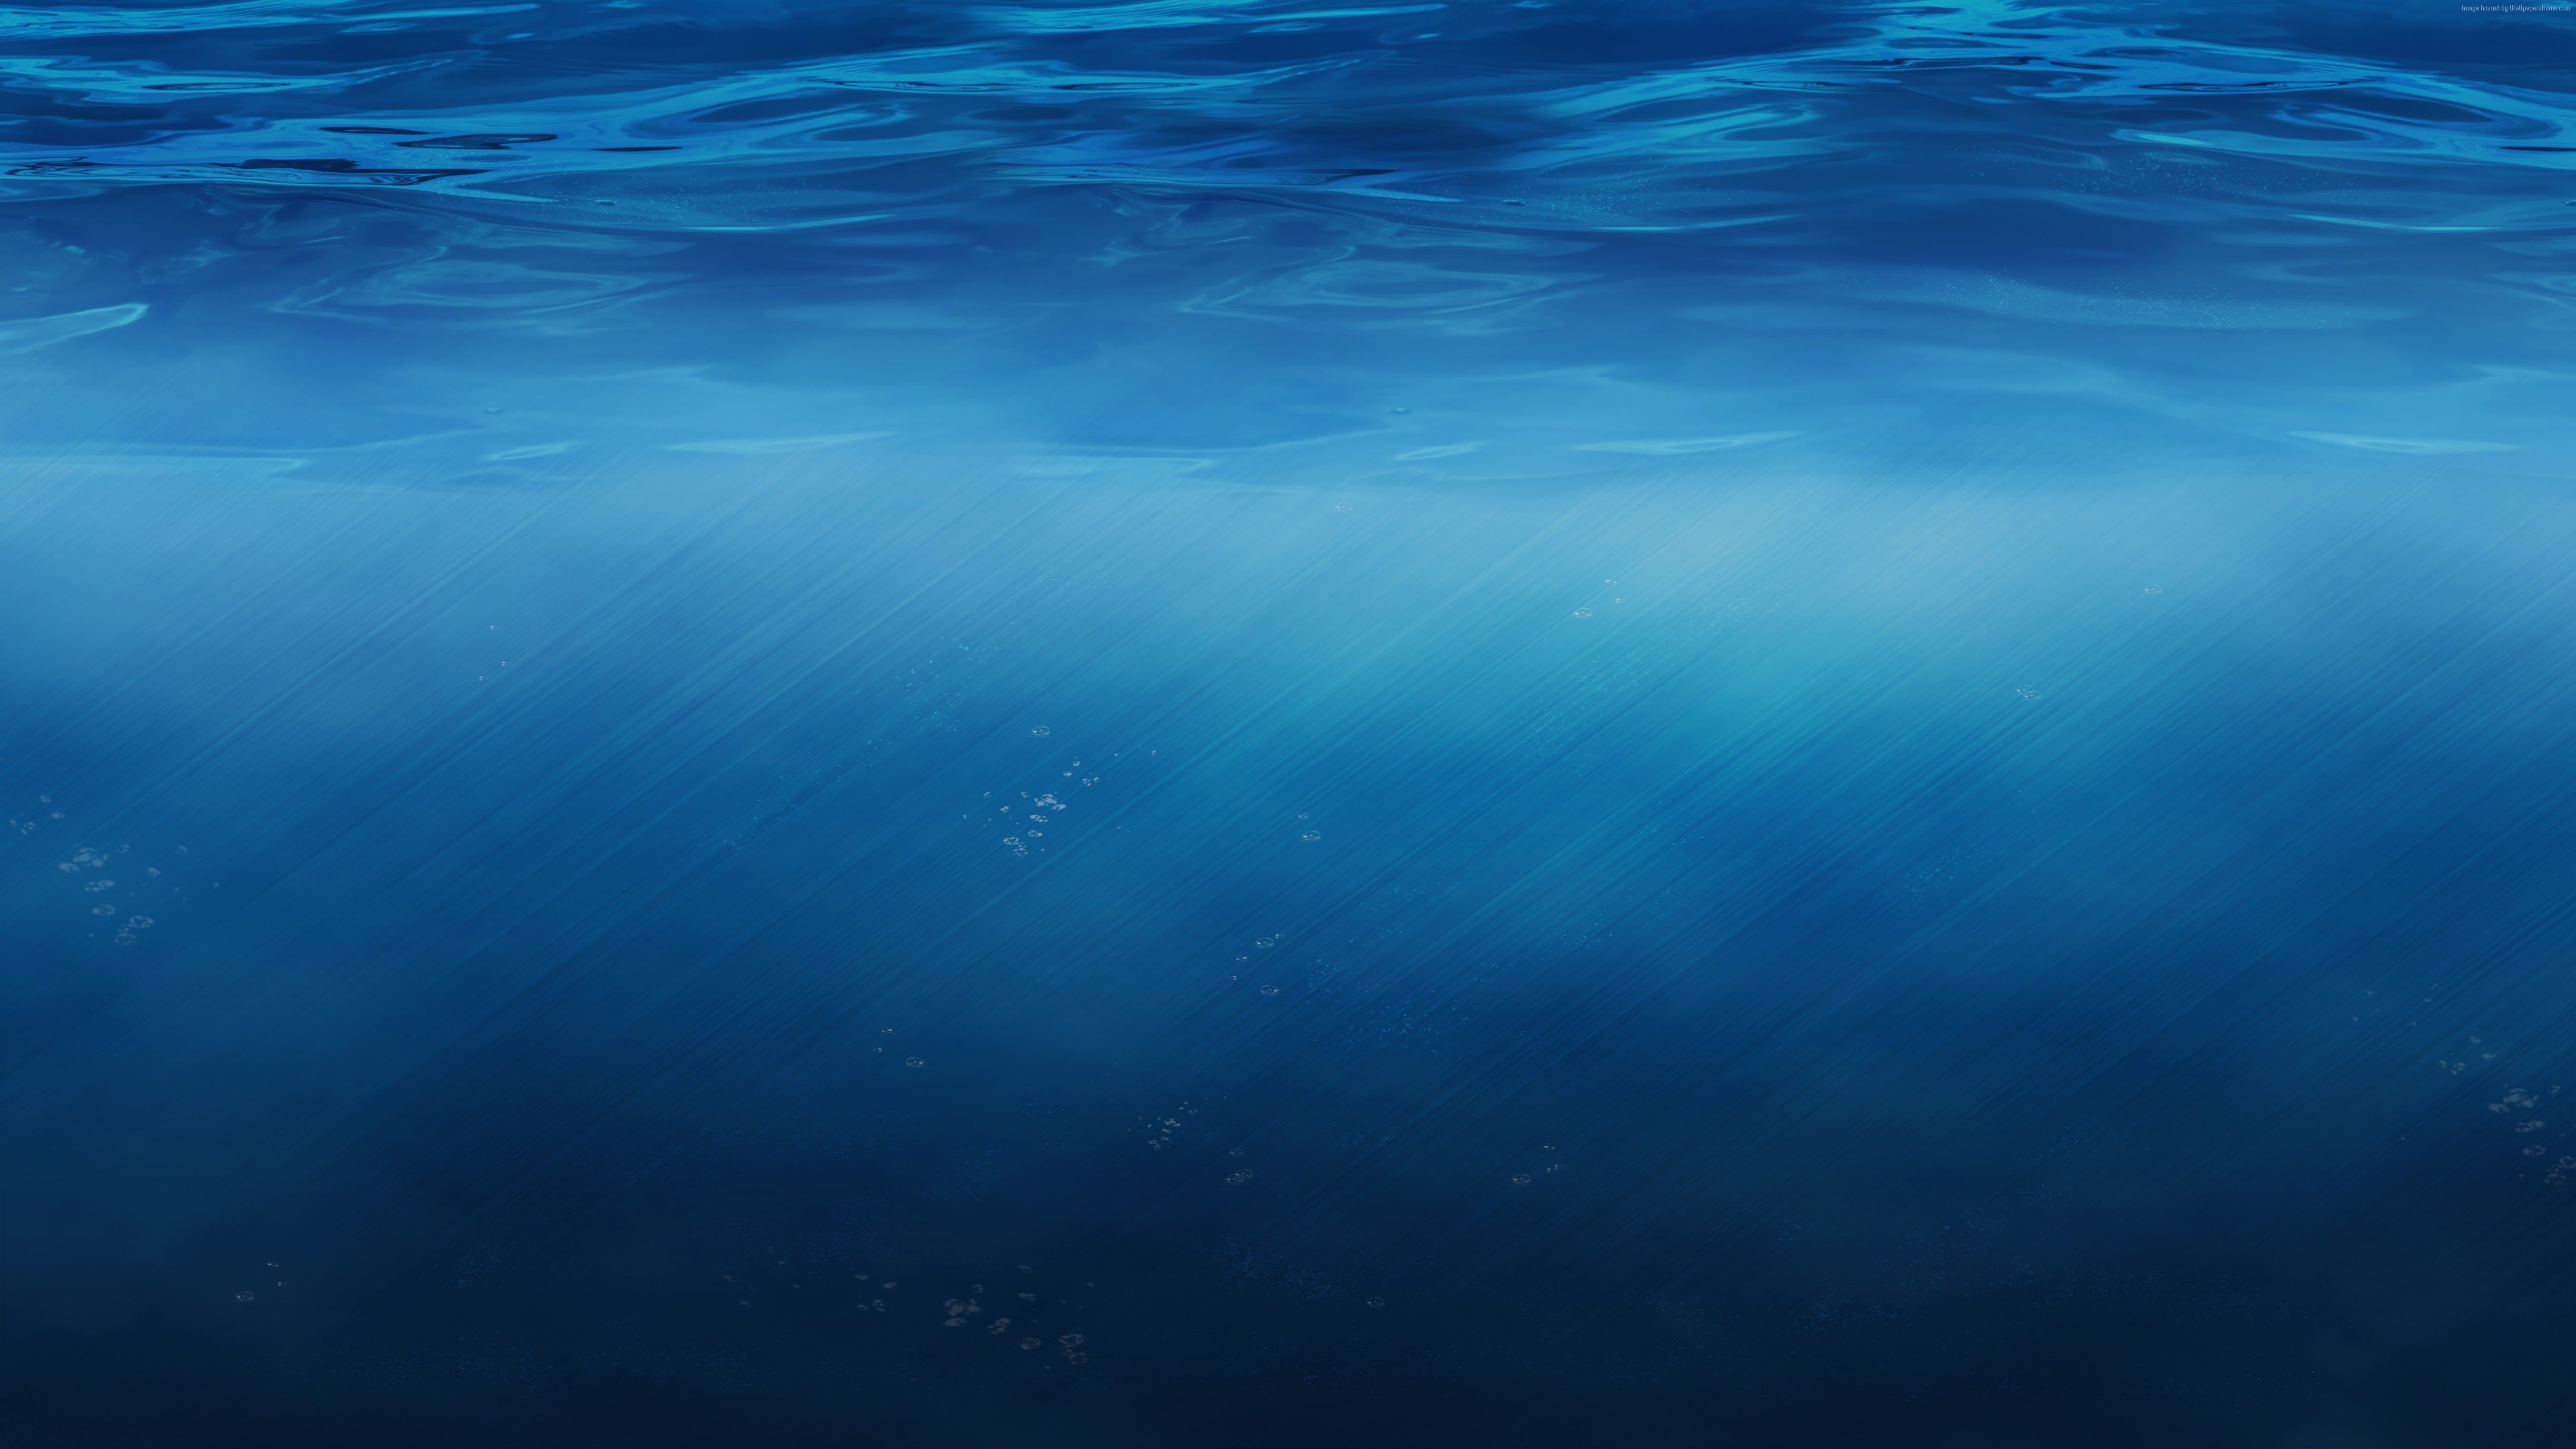 HD Underwater Background. Wallpaper, Background, Image, Art Photo. Underwater wallpaper, Underwater background, Ocean wallpaper